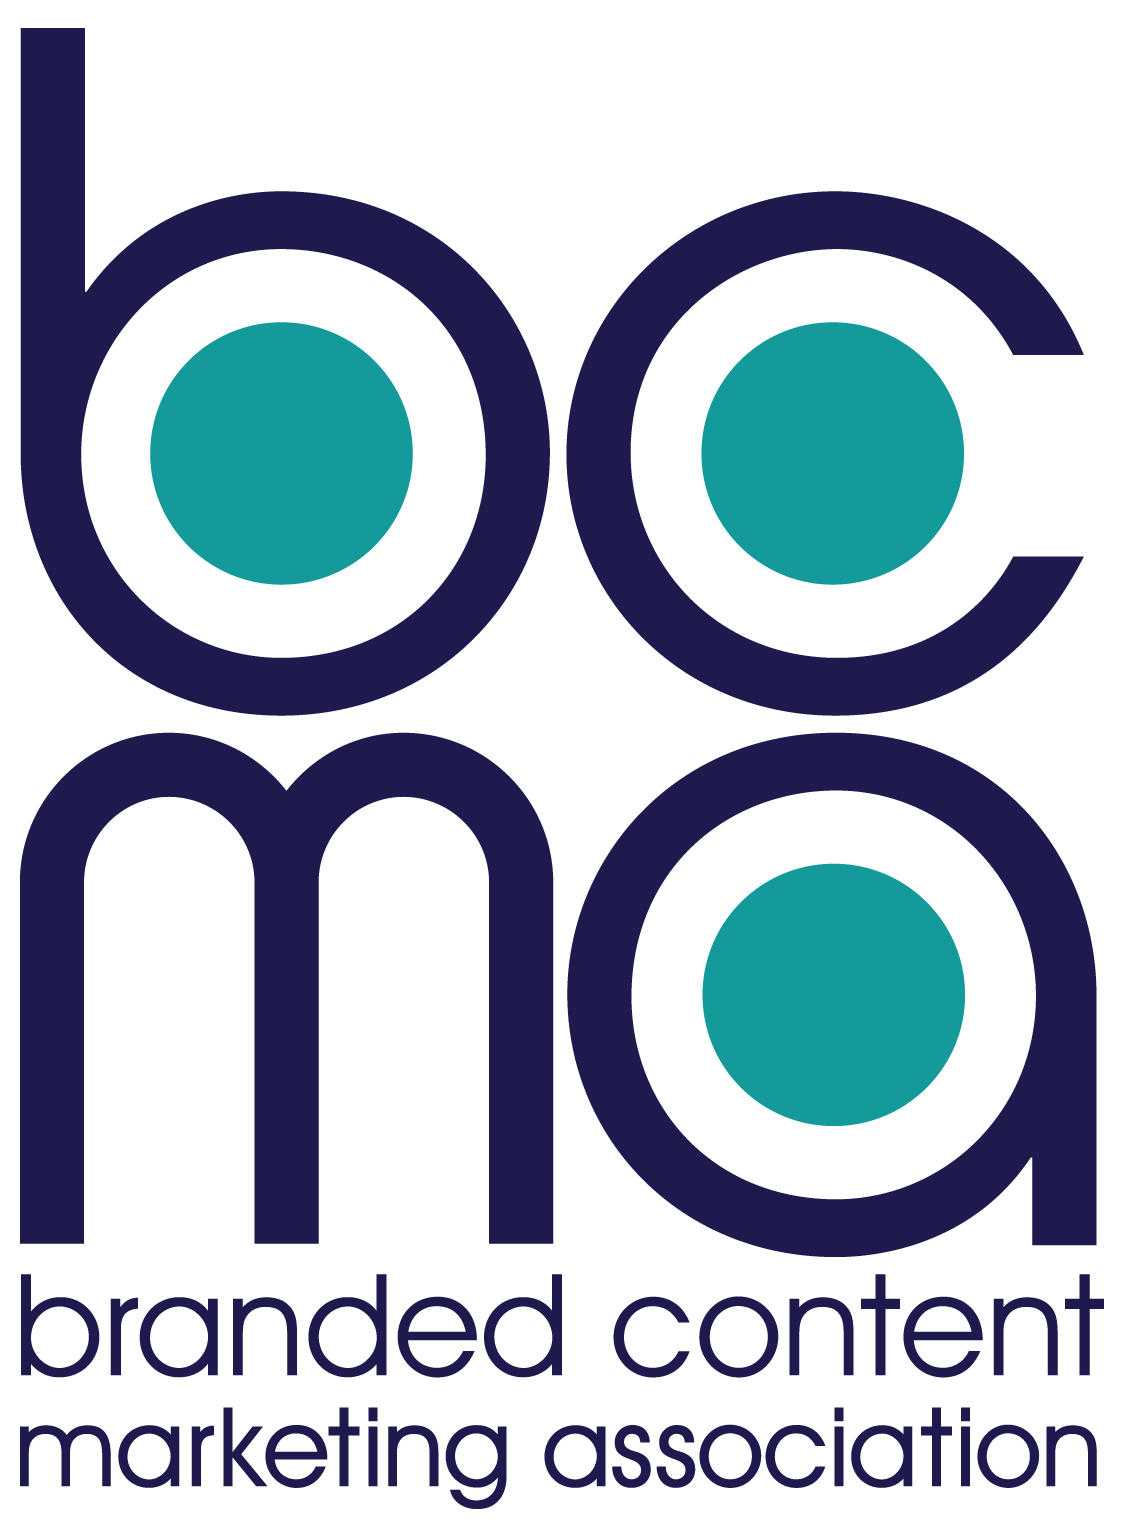 Branded Content Marketing Association